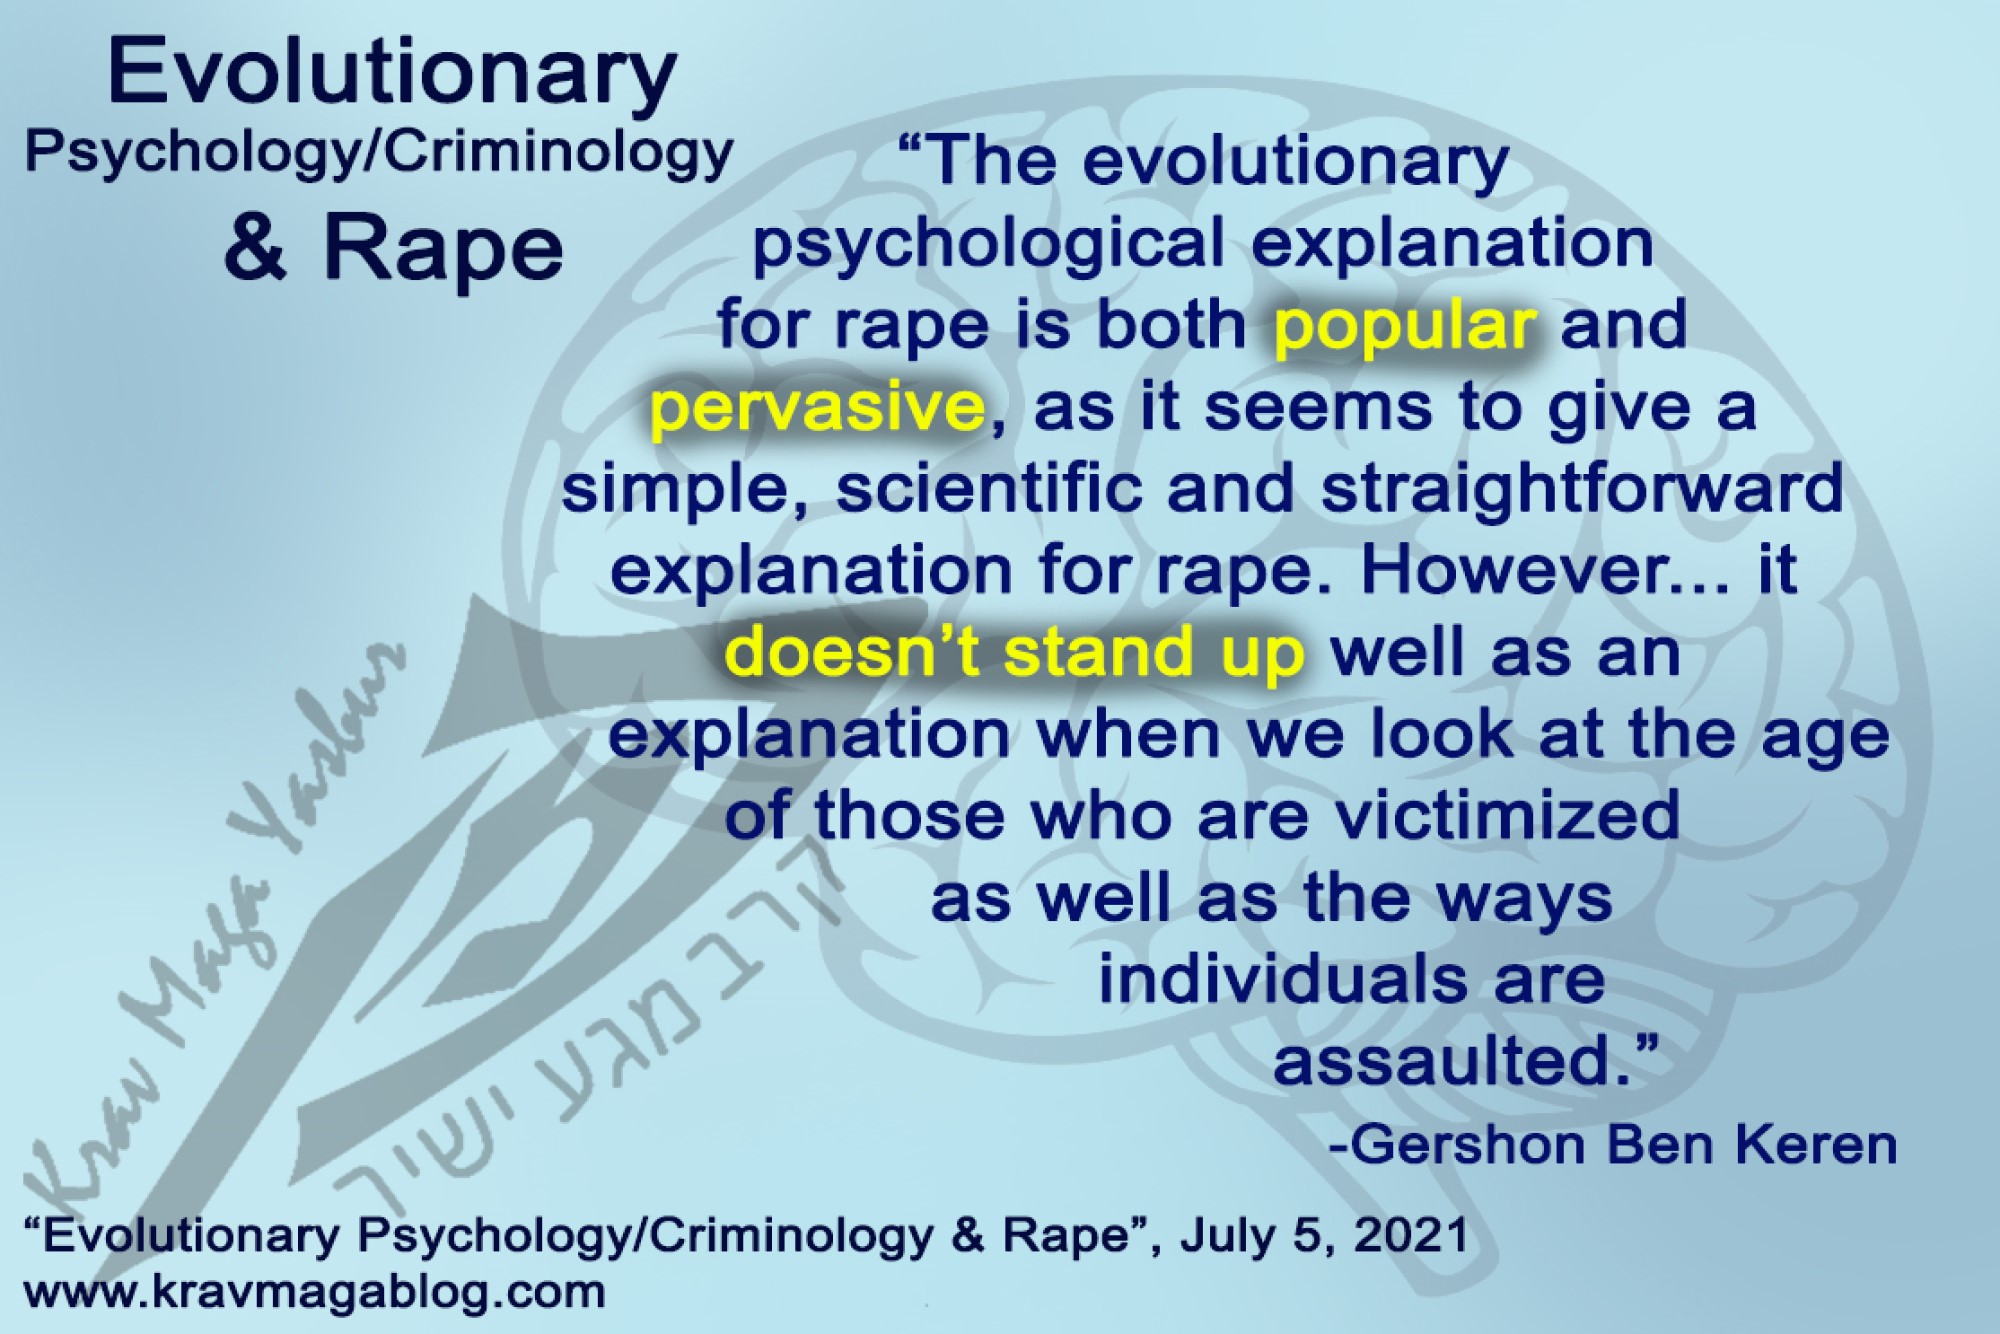 Blog About Evolutionary Psychology/Criminology & Rape